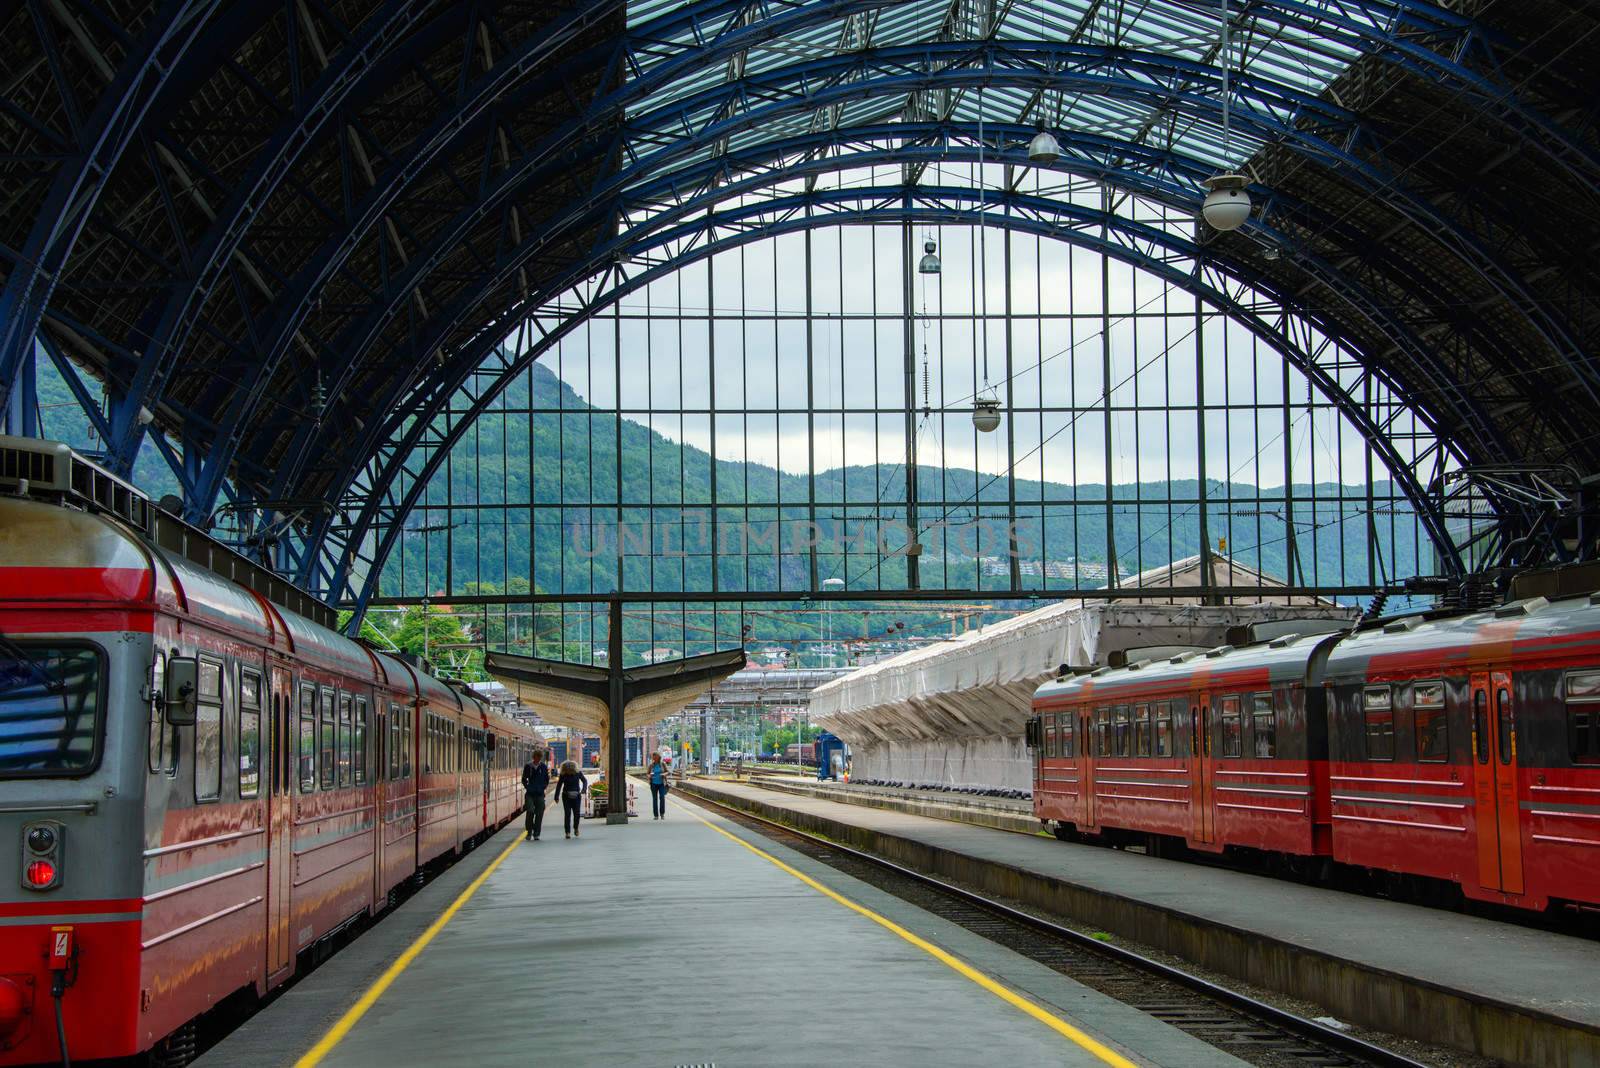 The railway station in Bergen city, Norway